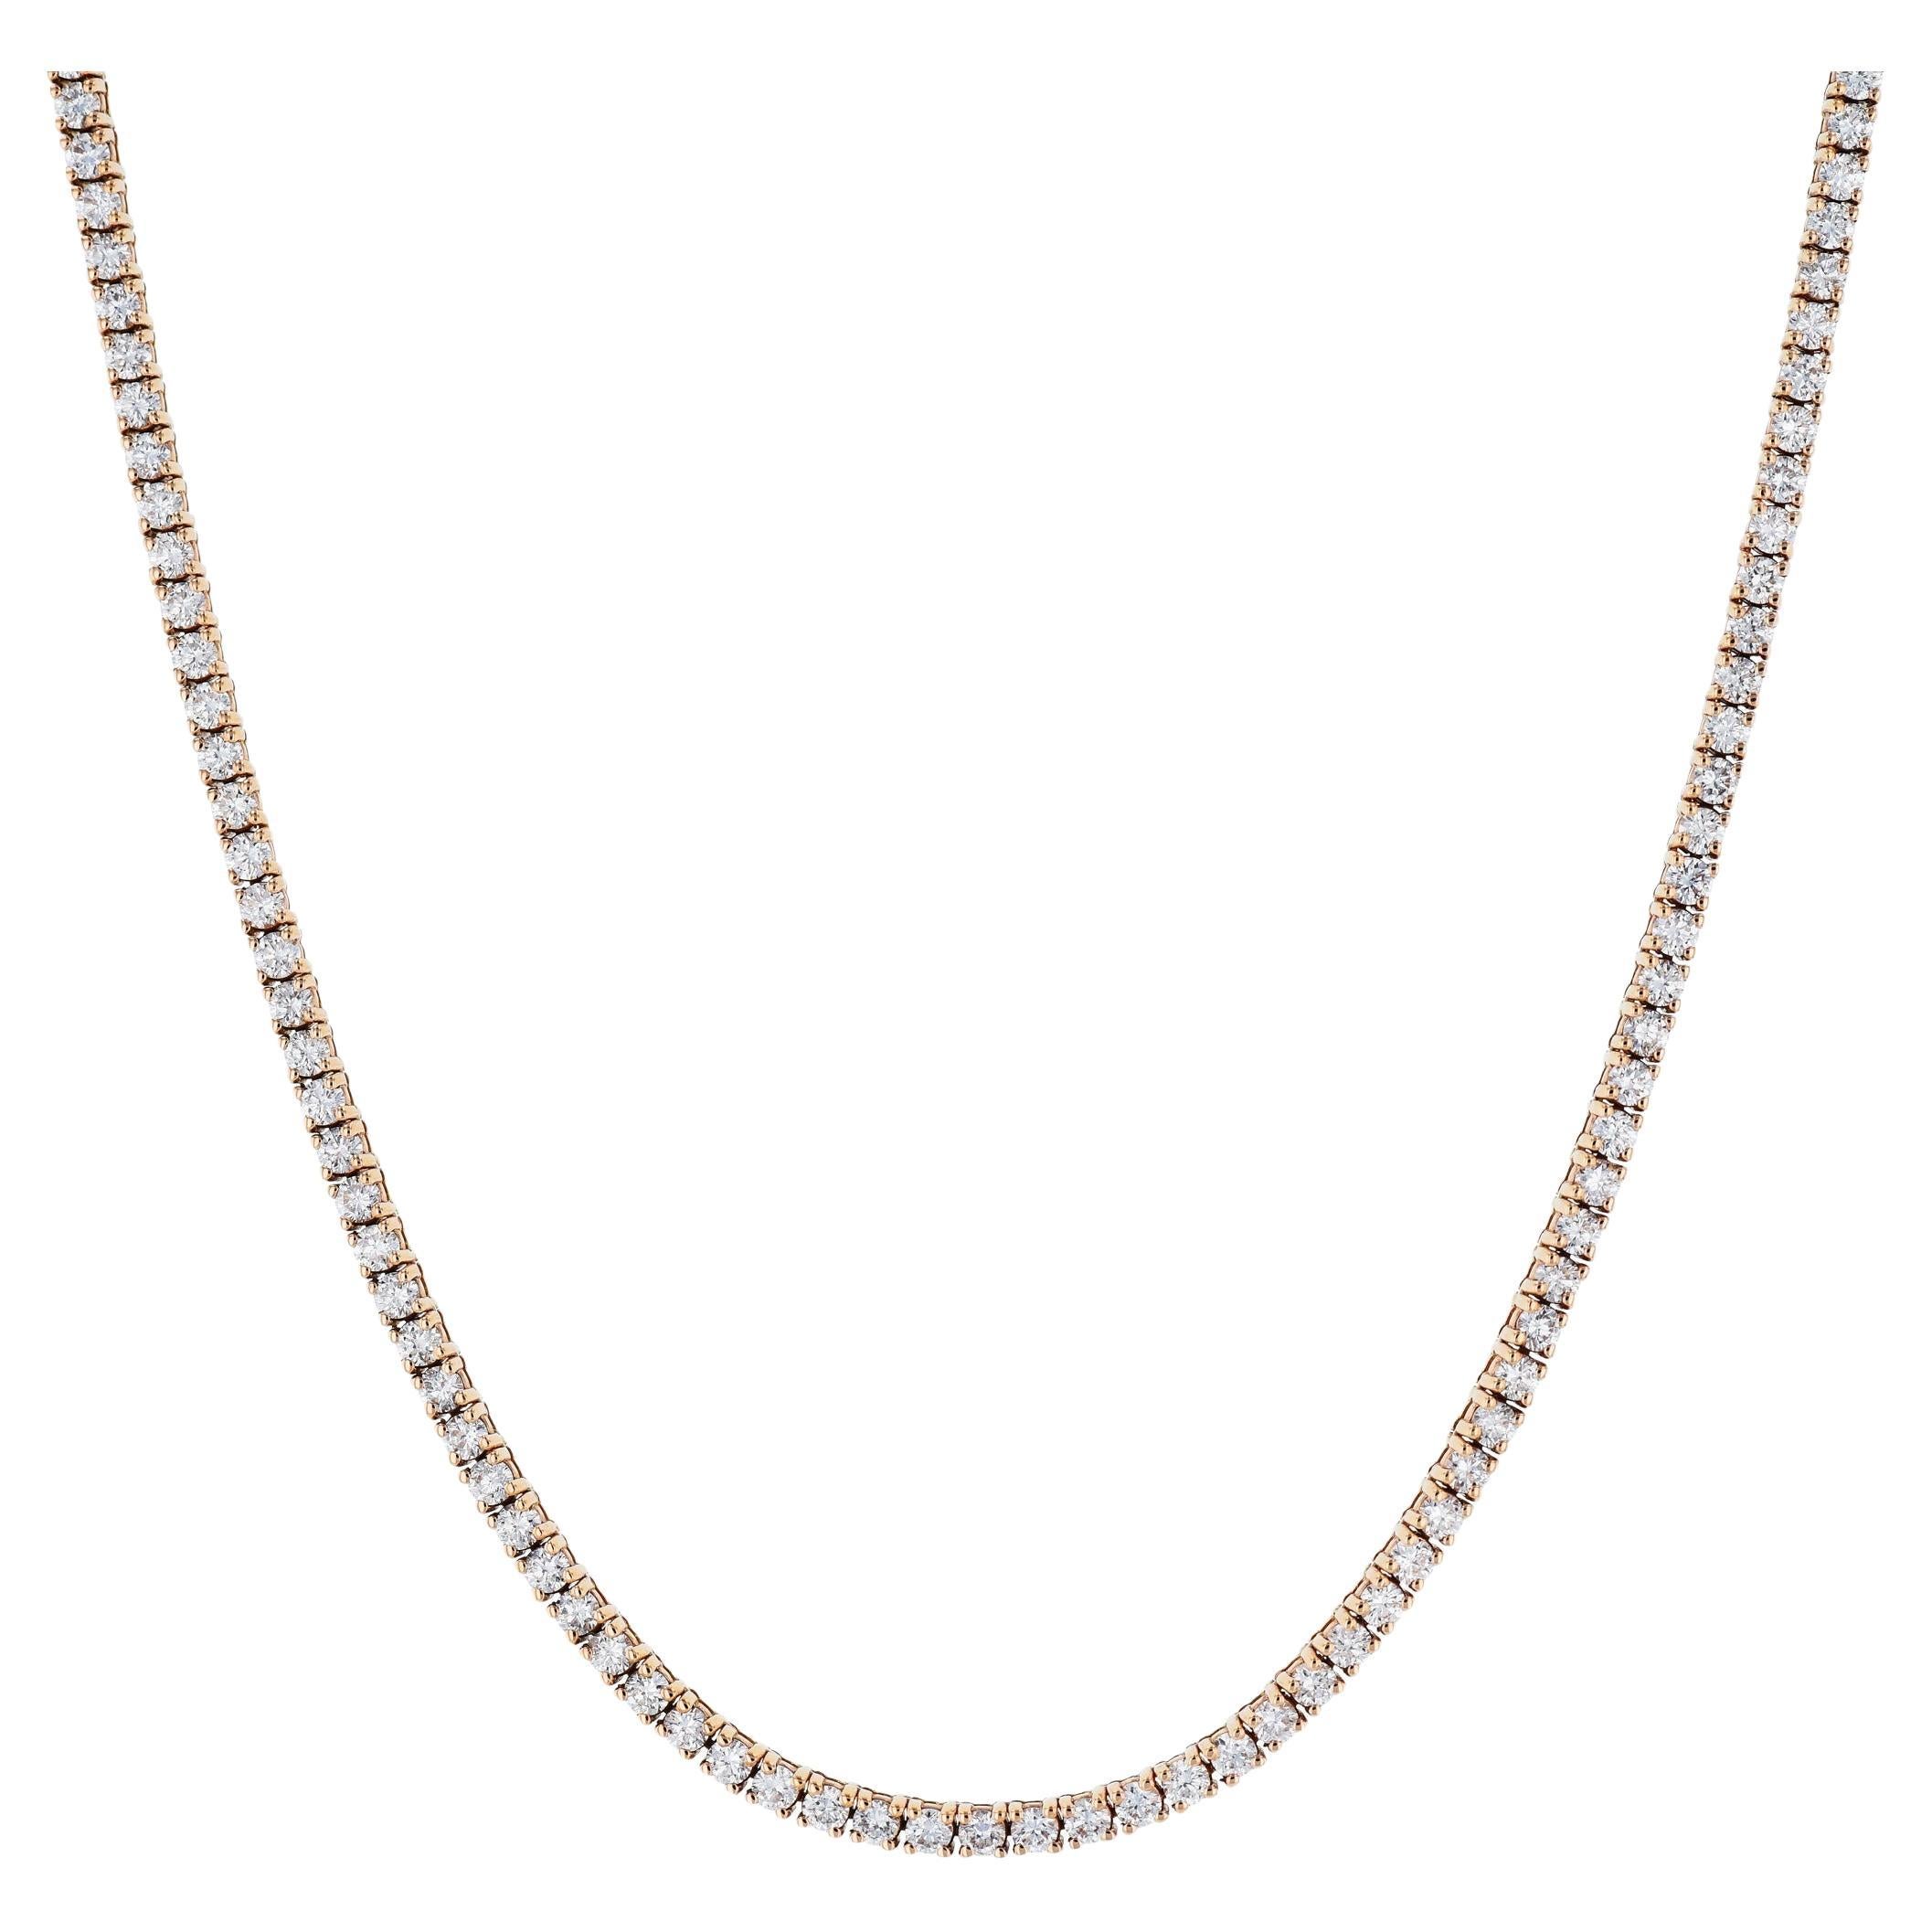 6.40 Carat Rose Gold Diamond Tennis Necklace